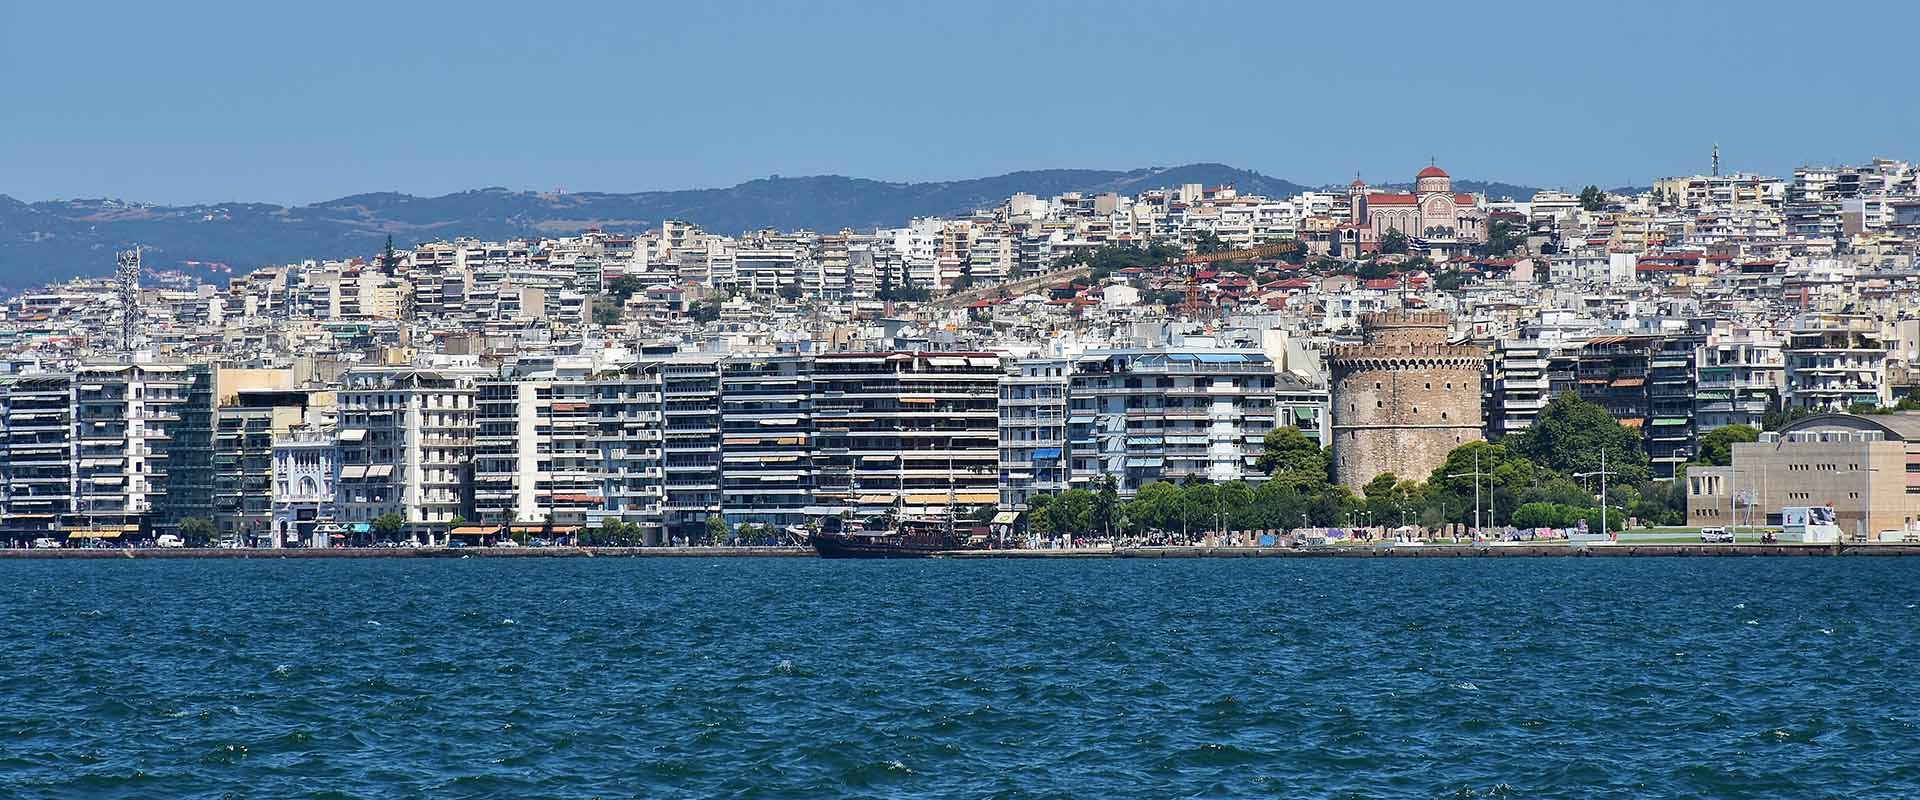 City of Thessaloniki Greece